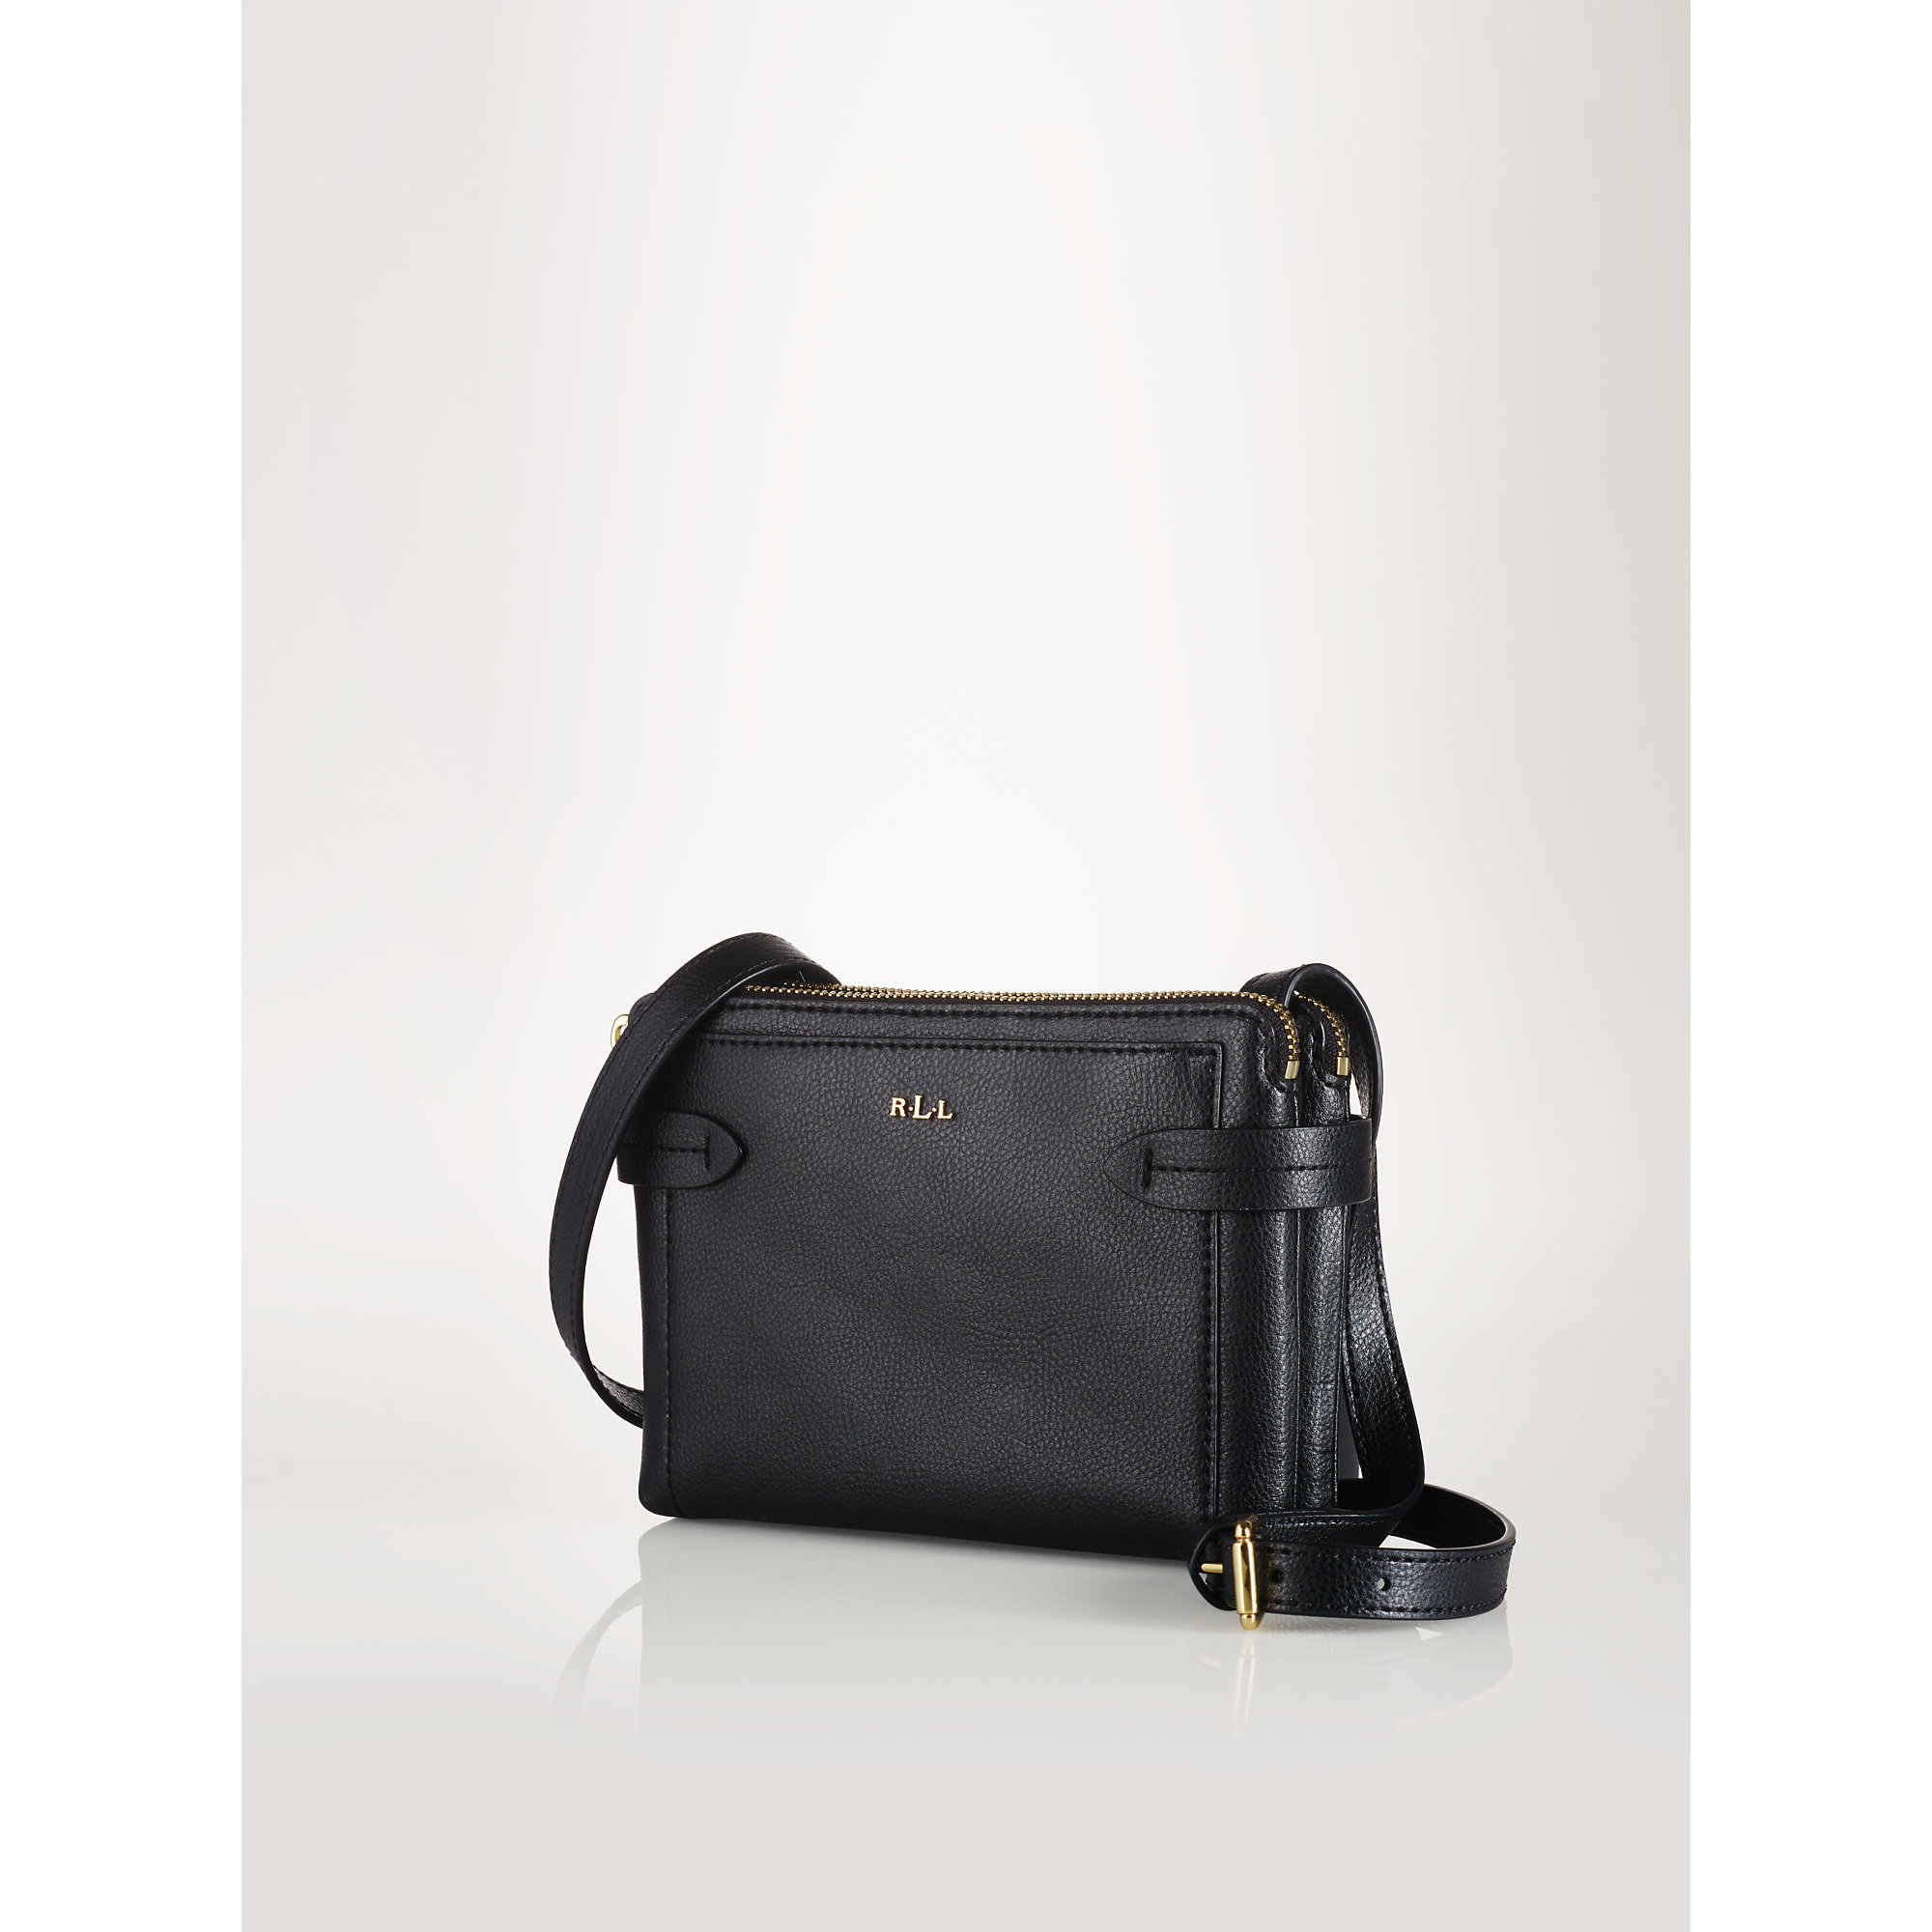 Ralph Lauren Crawley Leather Cross-body Bag in Black - Lyst